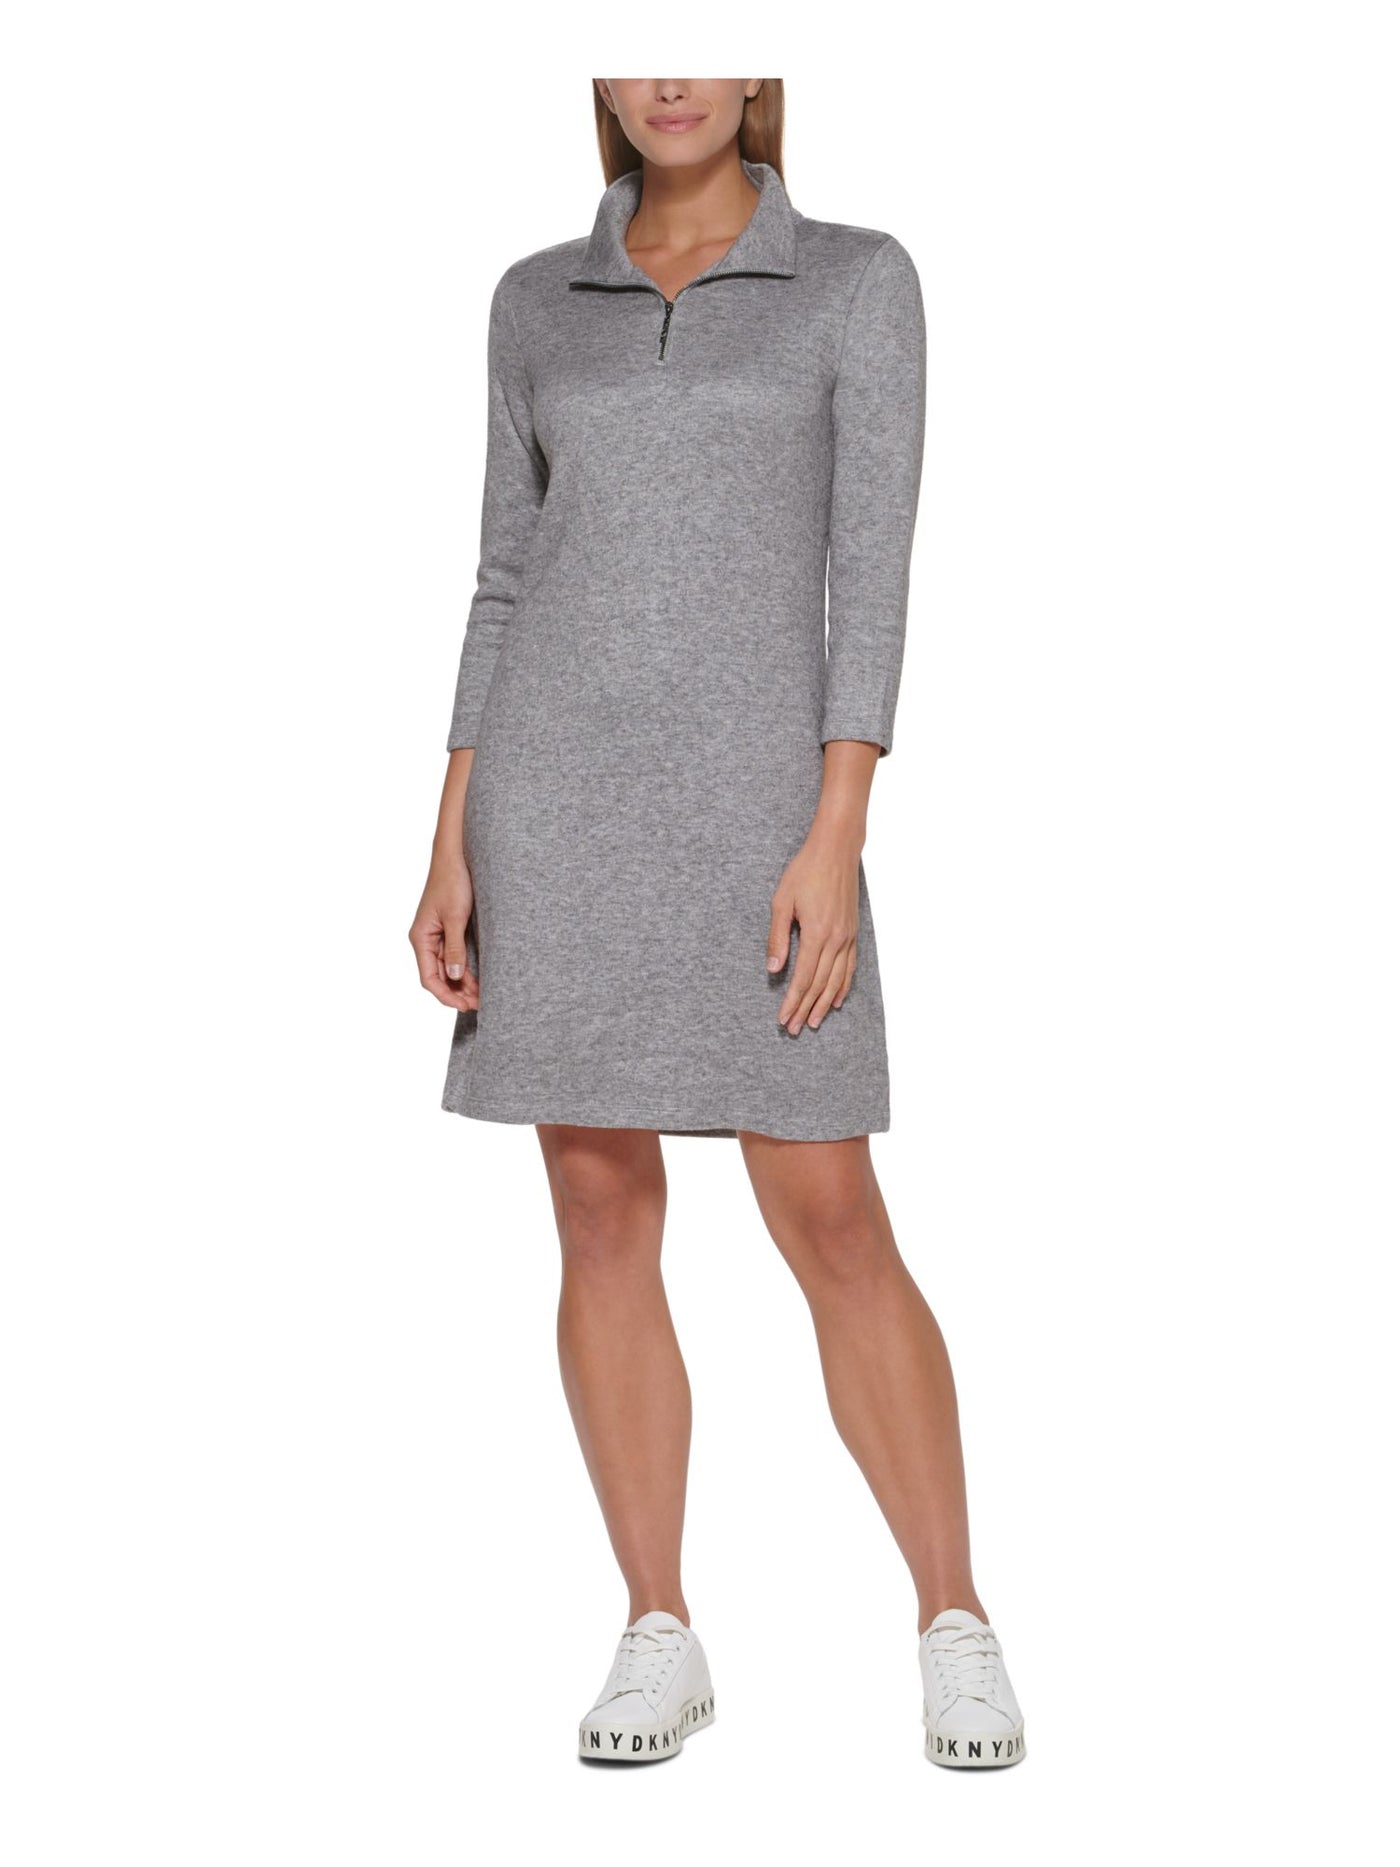 DKNY Womens Gray Knit Zippered Quarter Zip Heather Long Sleeve Mock Neck Above The Knee Sweater Dress XL